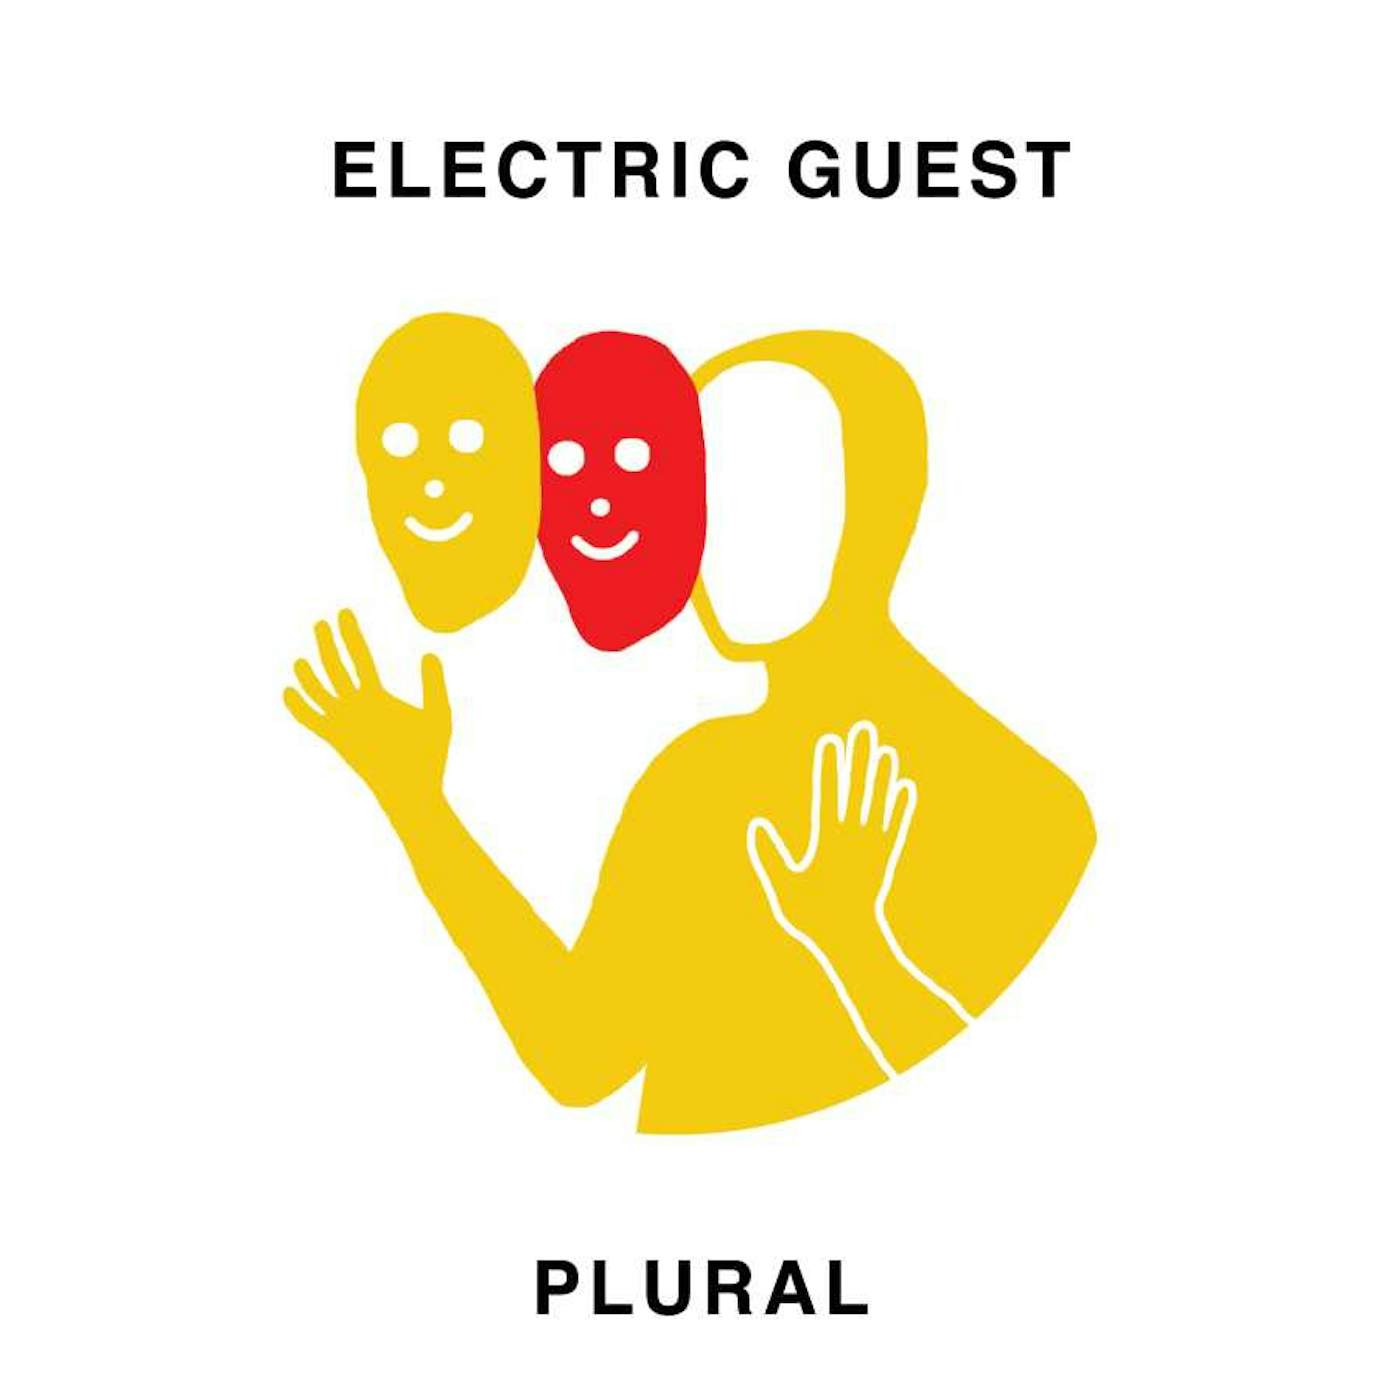 Electric Guest Plural Vinyl Record